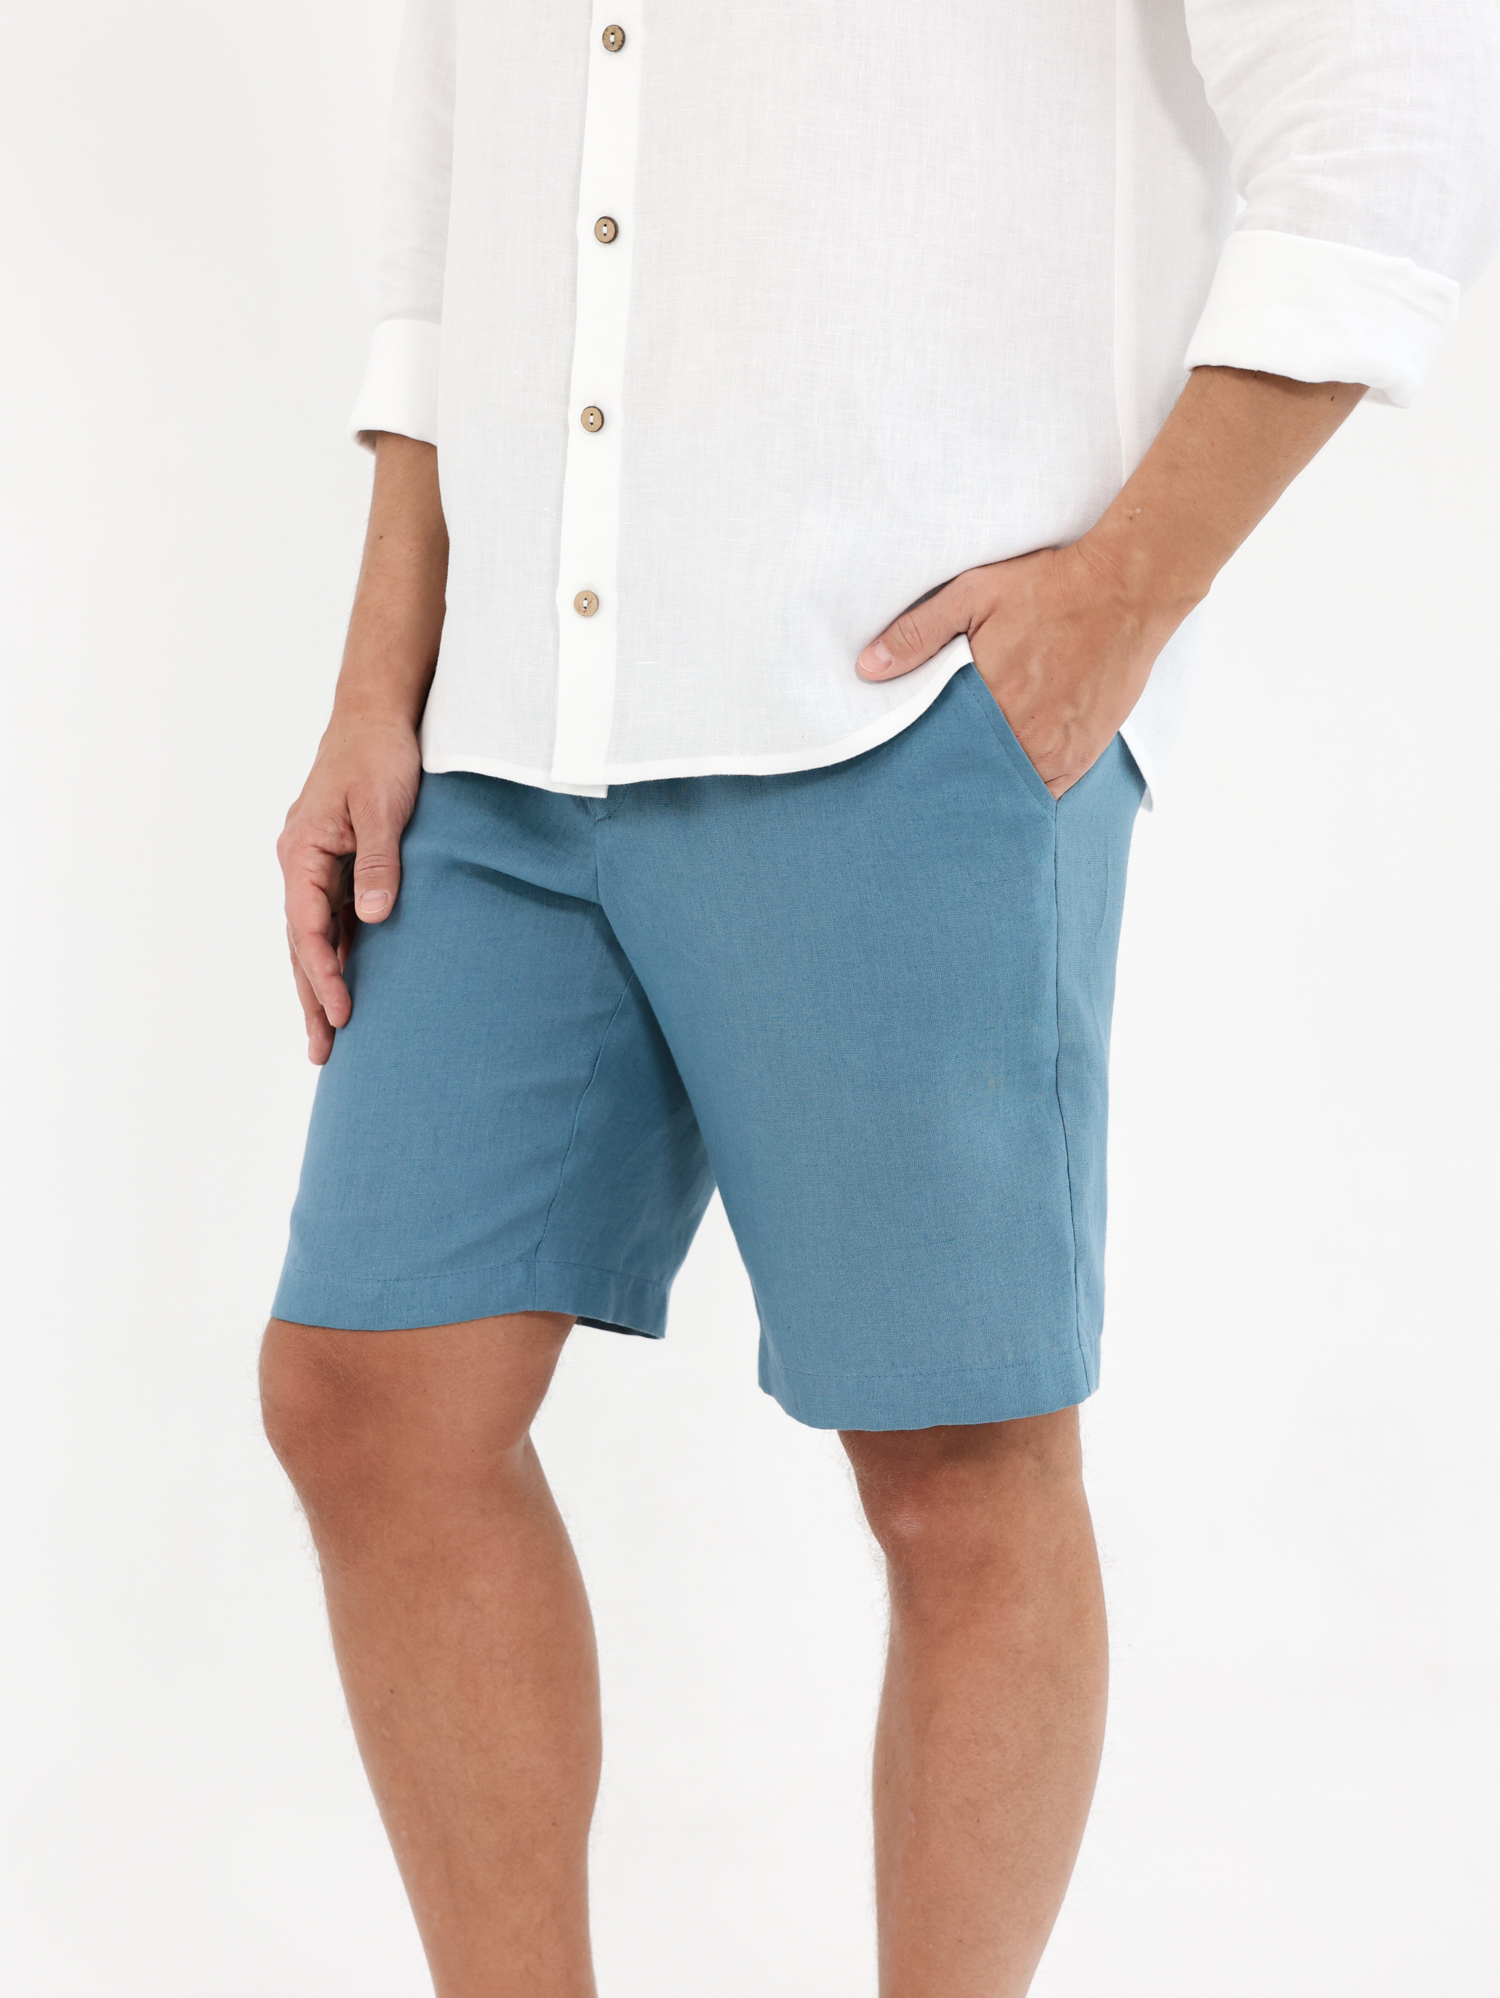 Blue linen men's shorts